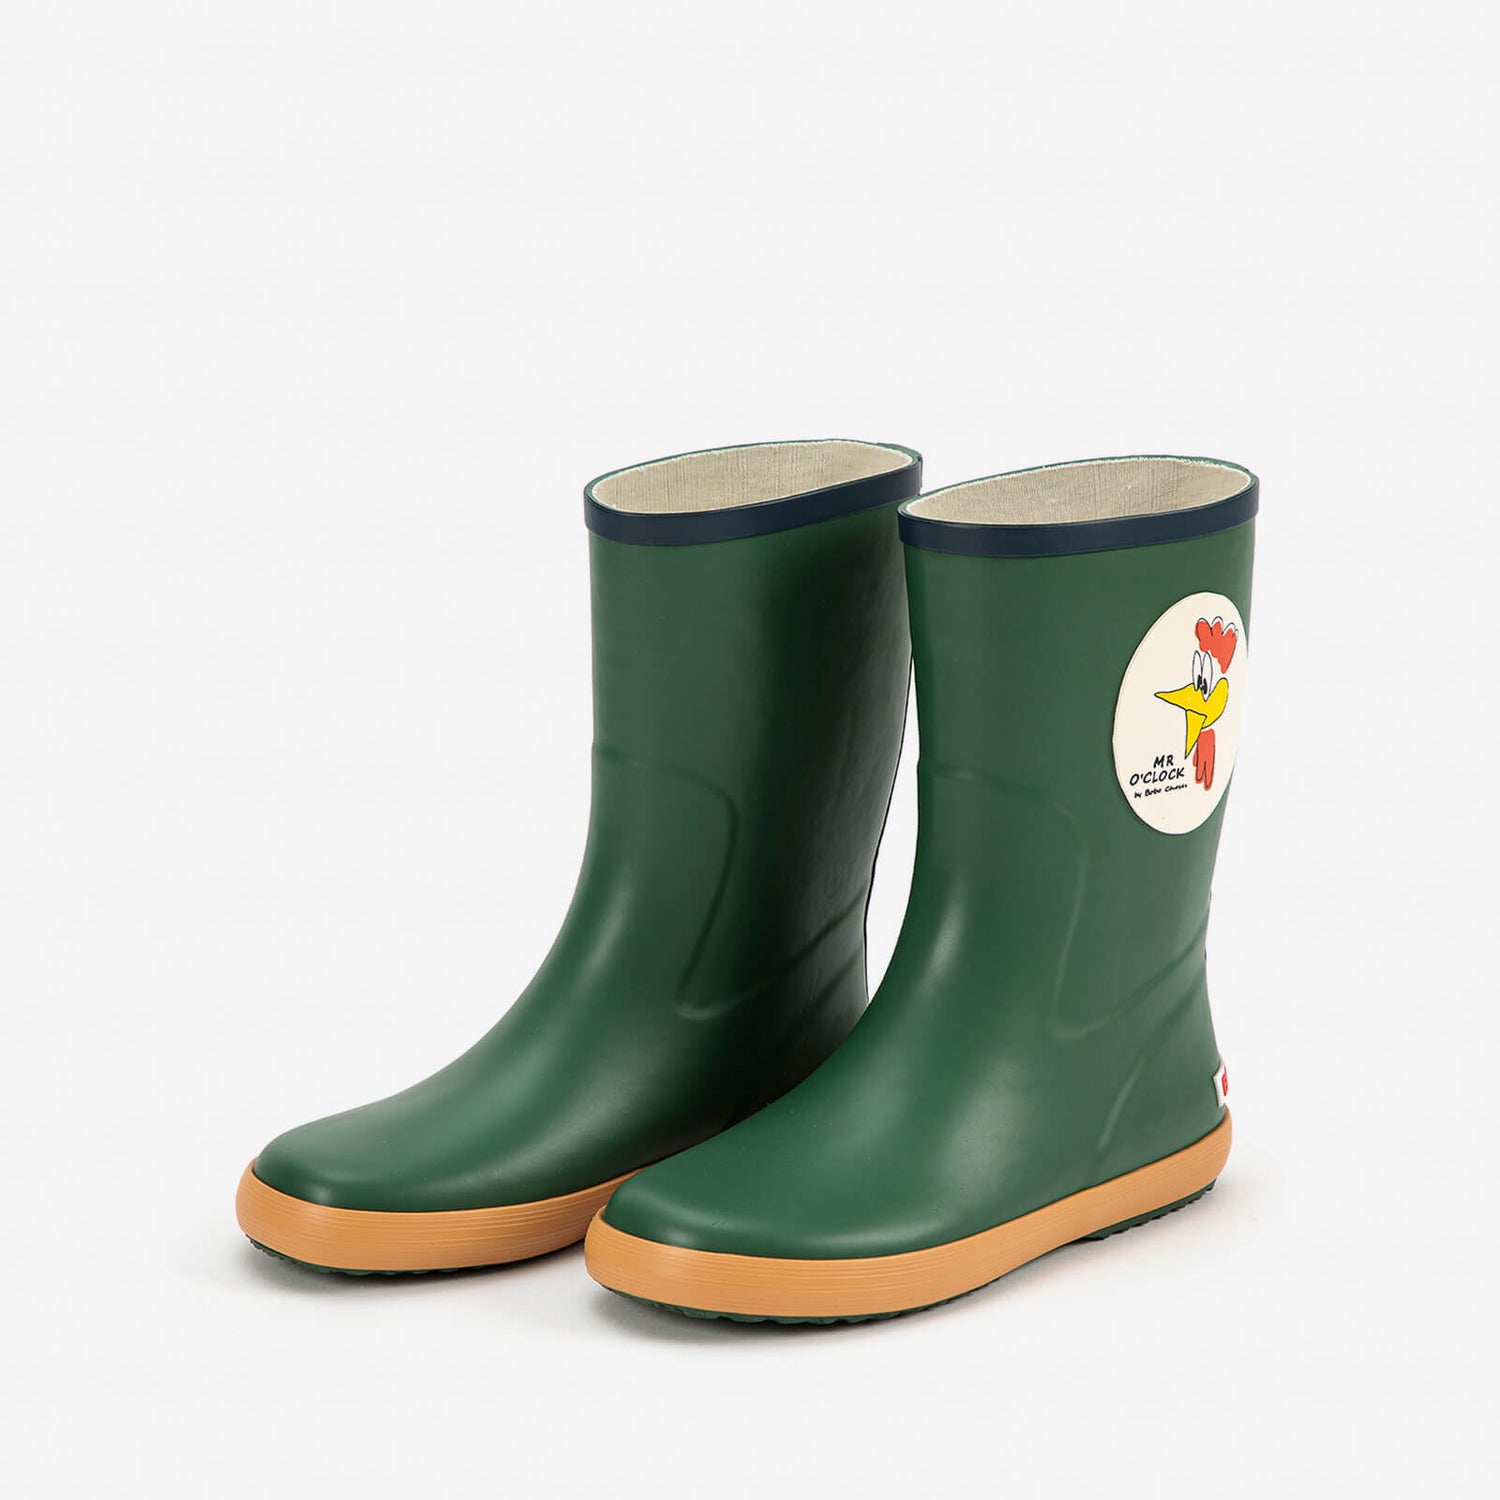 BoBo Choses Kids' Mr O'Clock Rubber Wellington Boots - UK 10 Kids